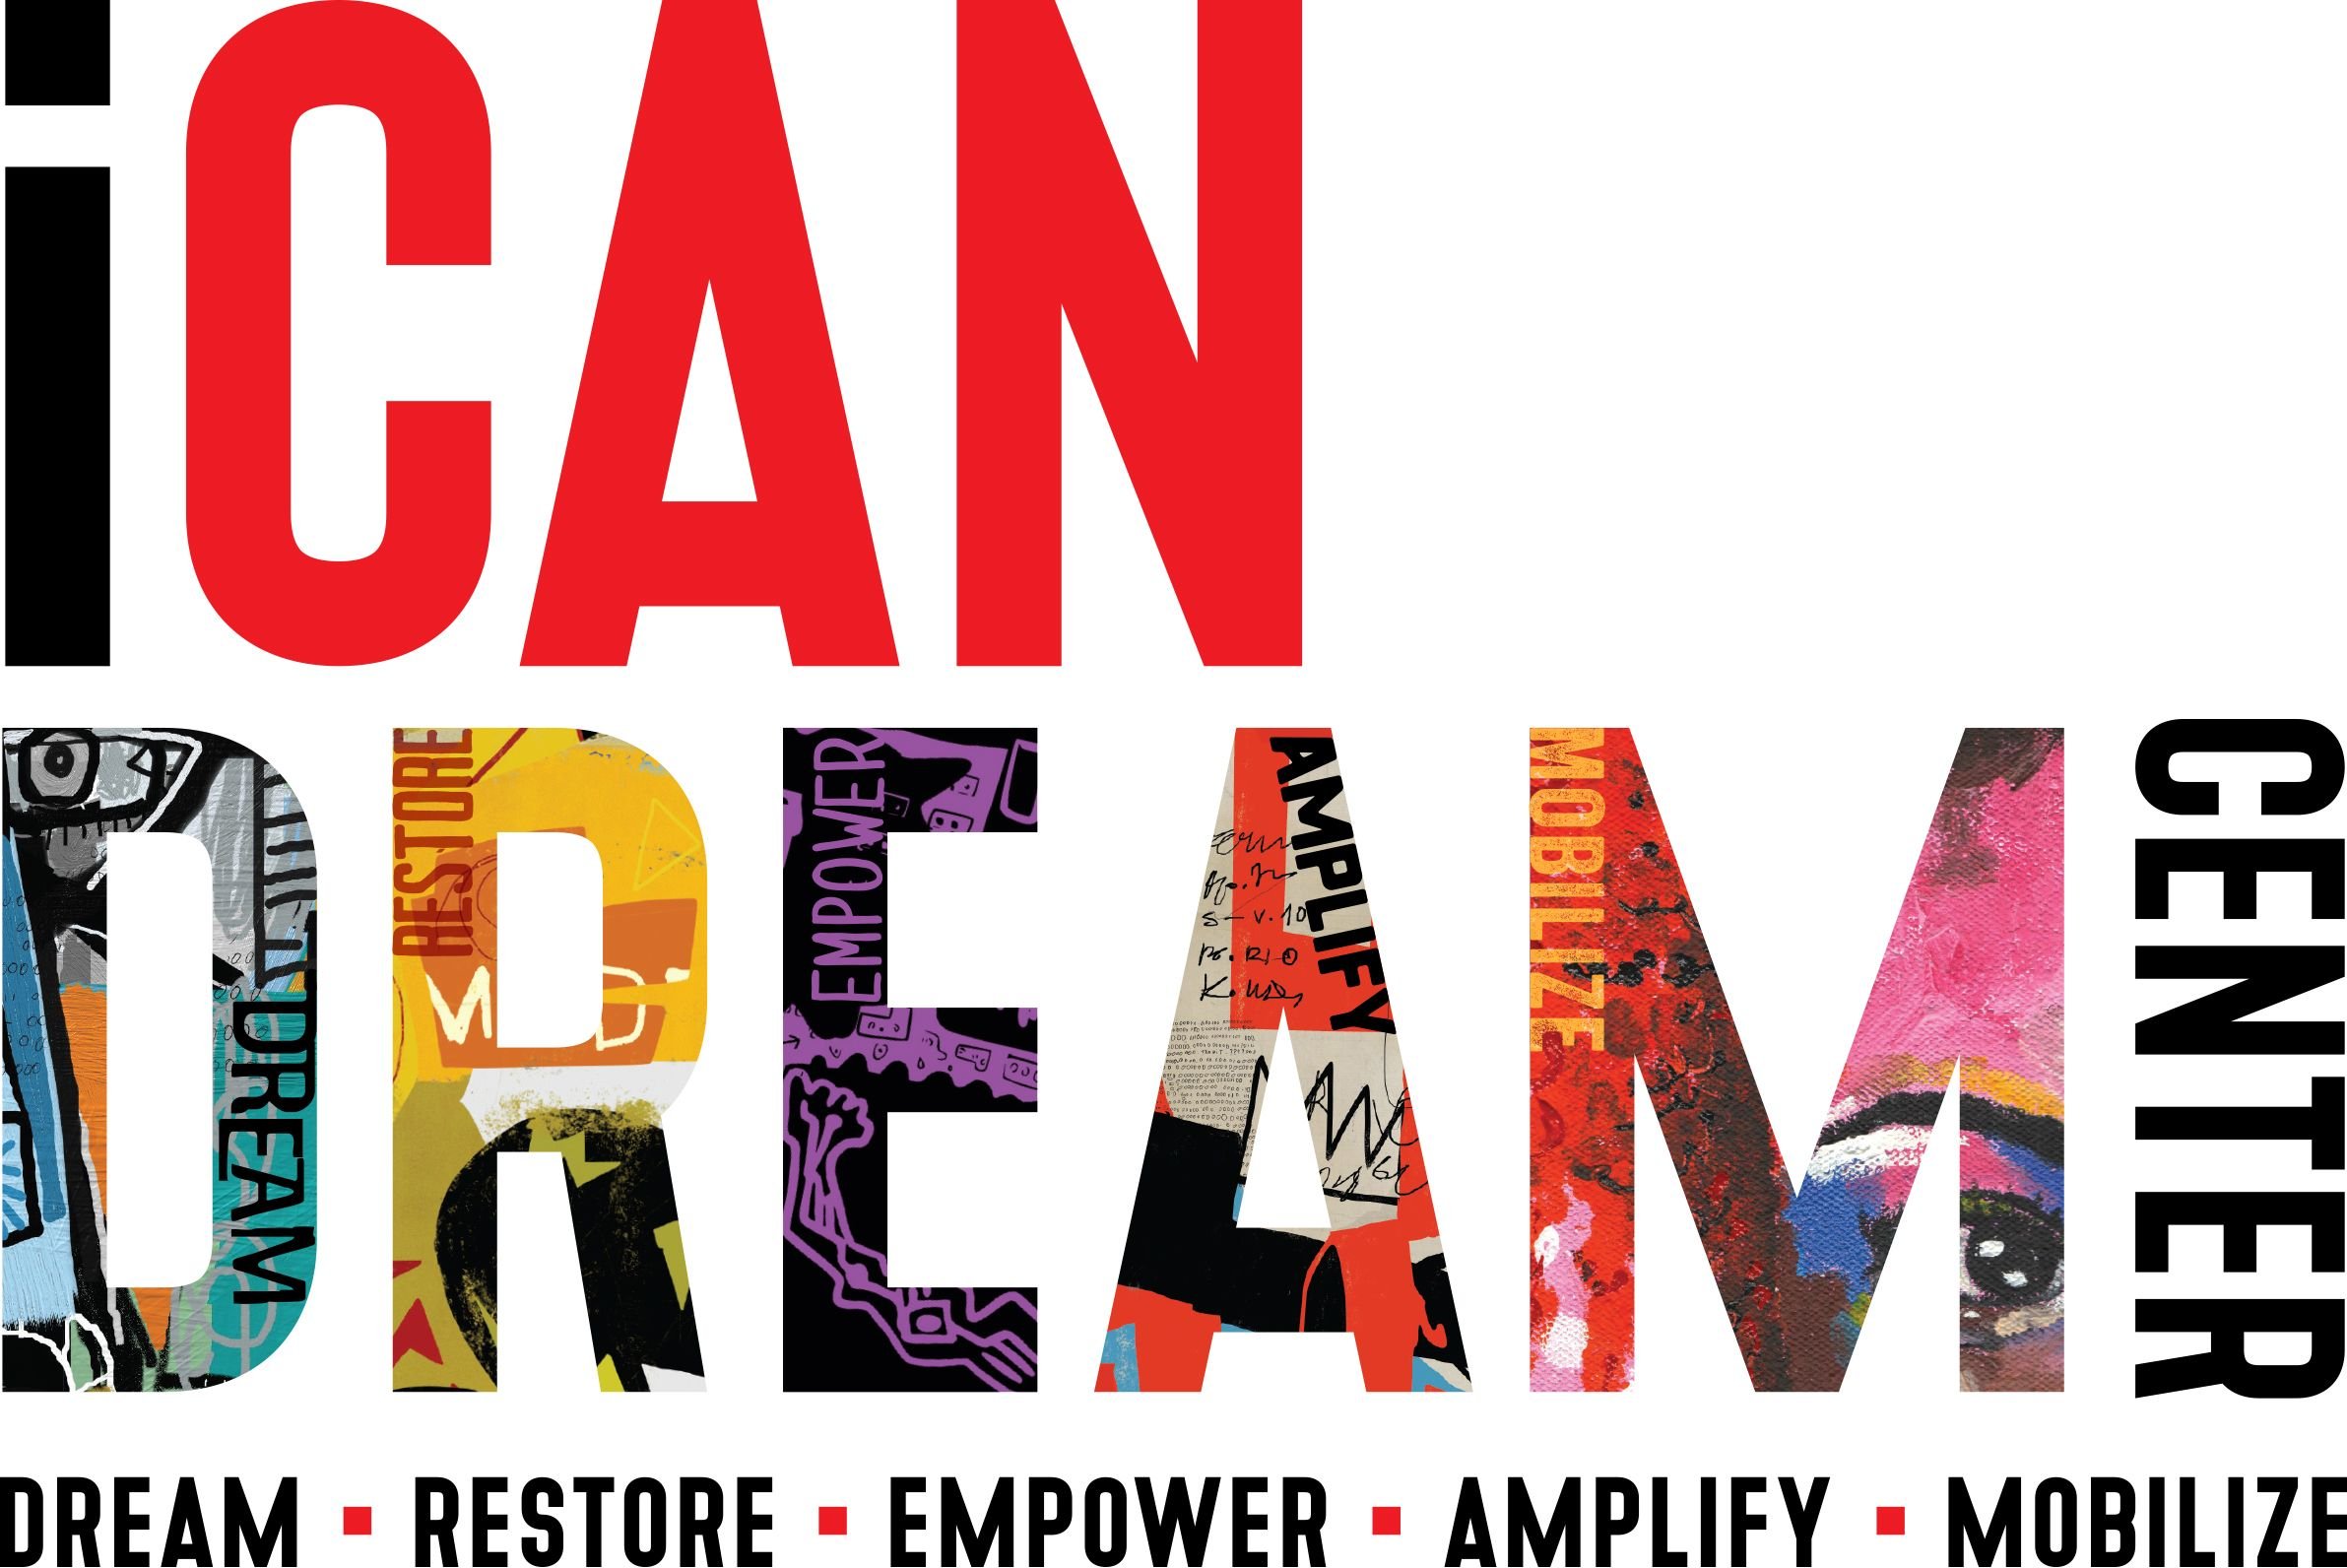 221206 iCan Dream Center logo new.jpeg